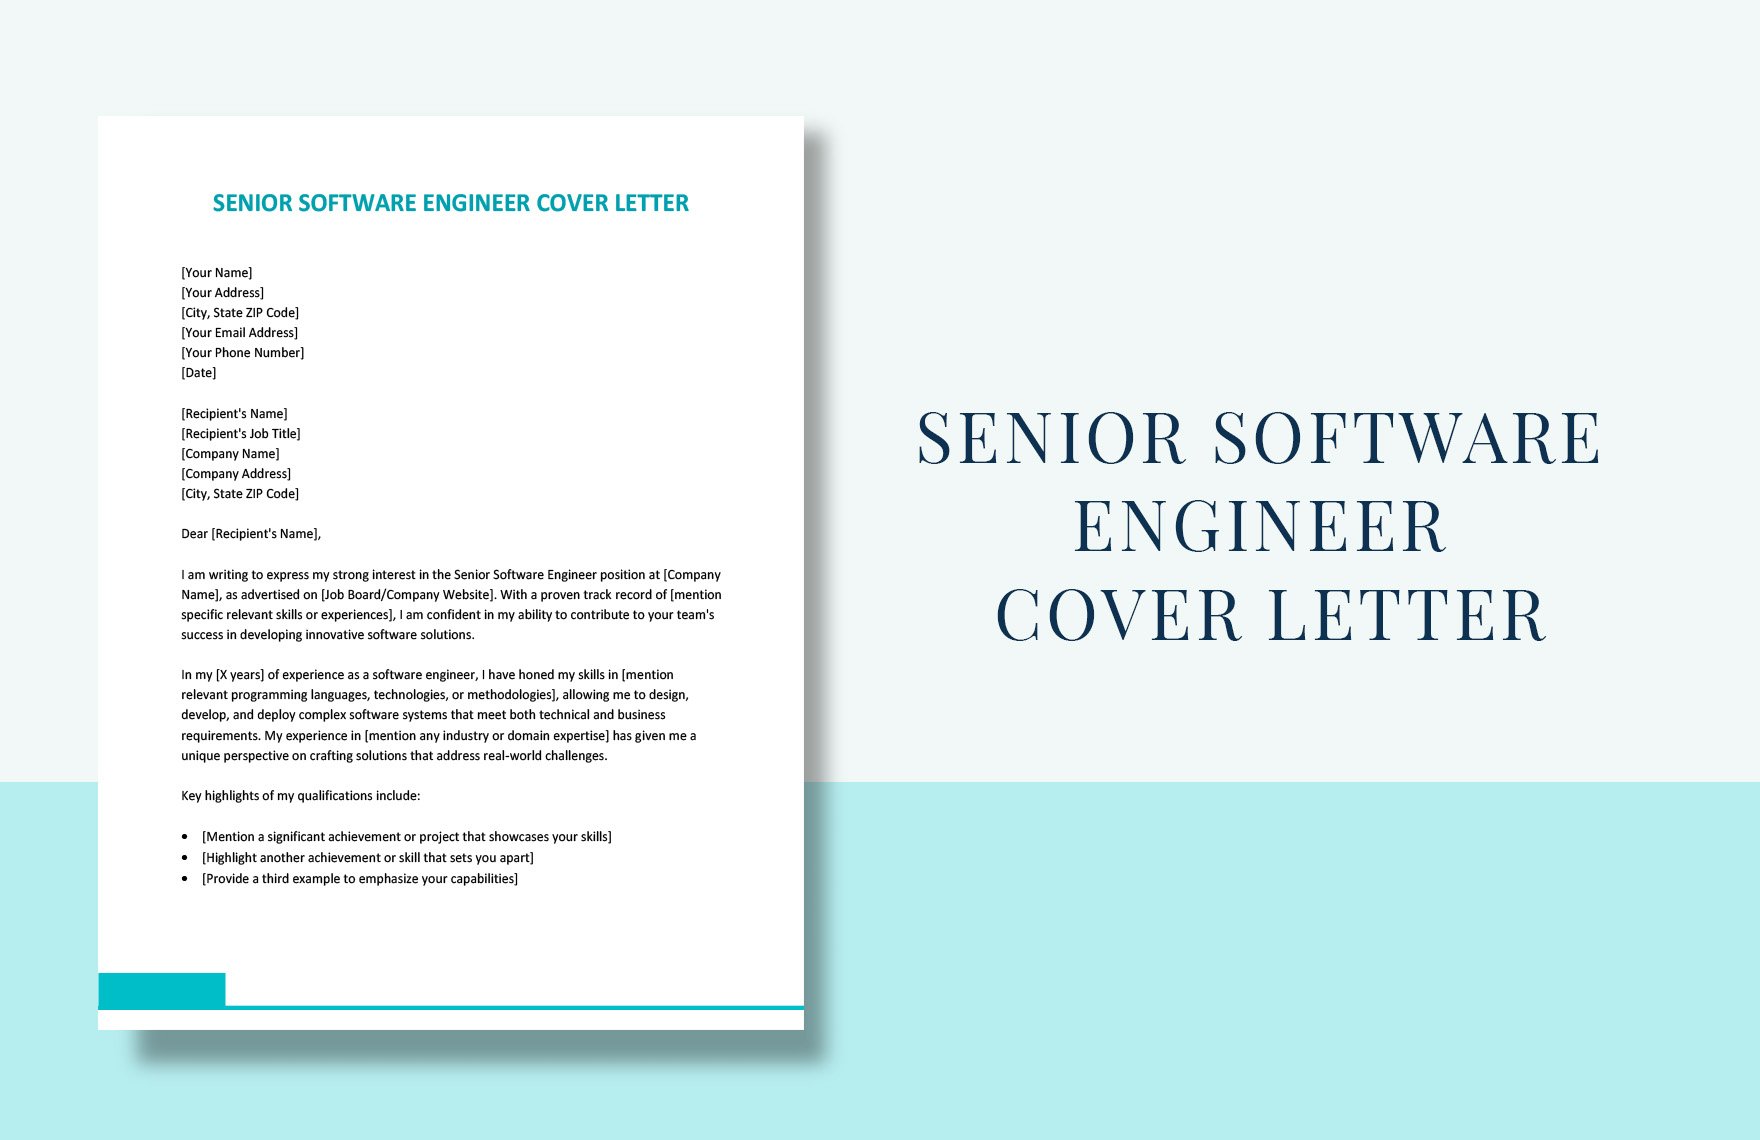 Senior Software Engineer Cover Letter in Word, Google Docs